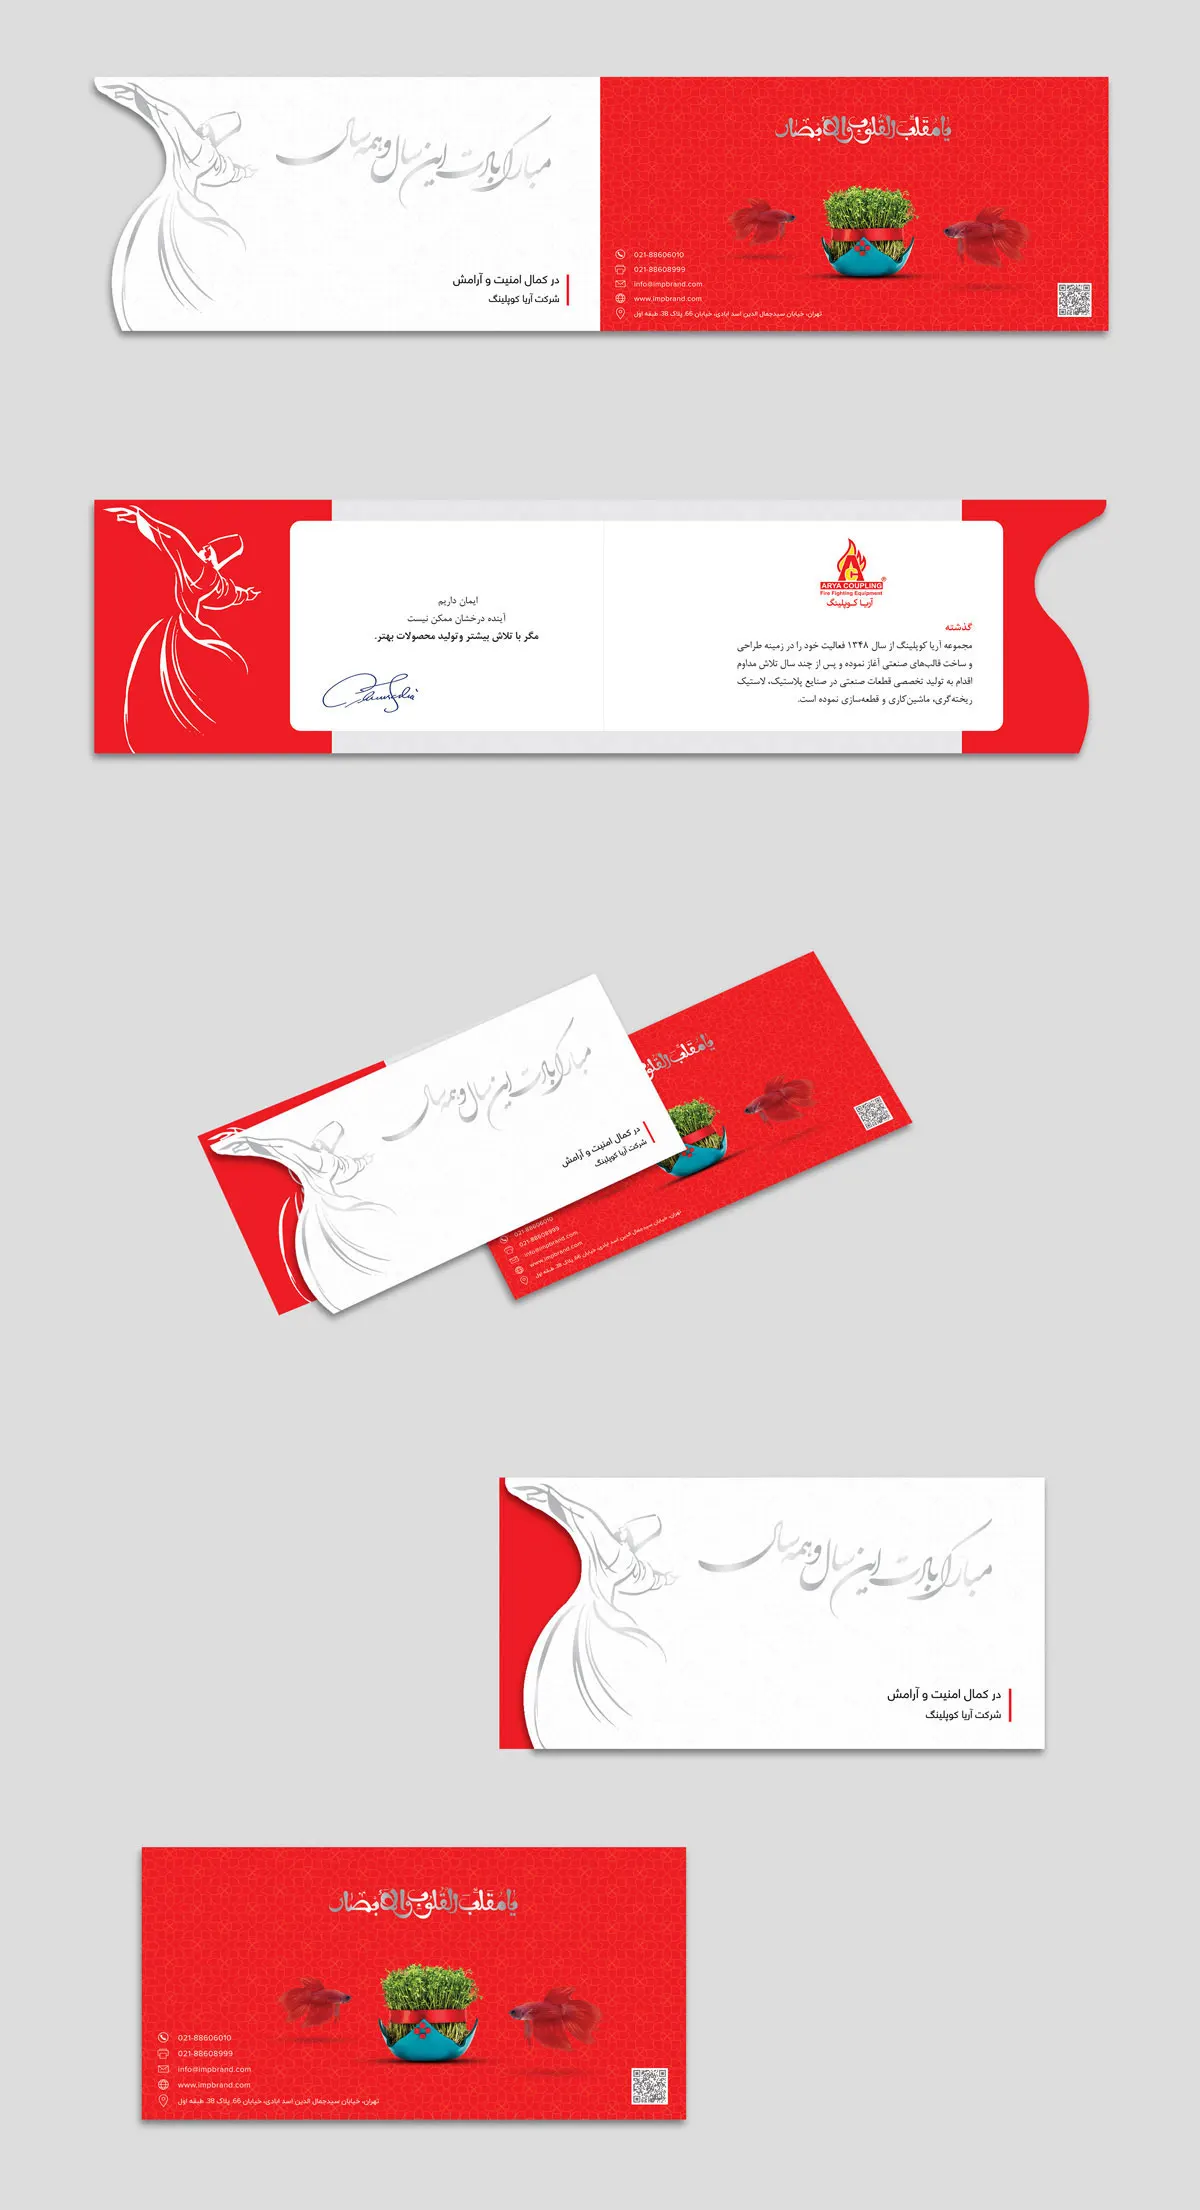 Aria Coupling Company advertising design | Hossein Donyadideh